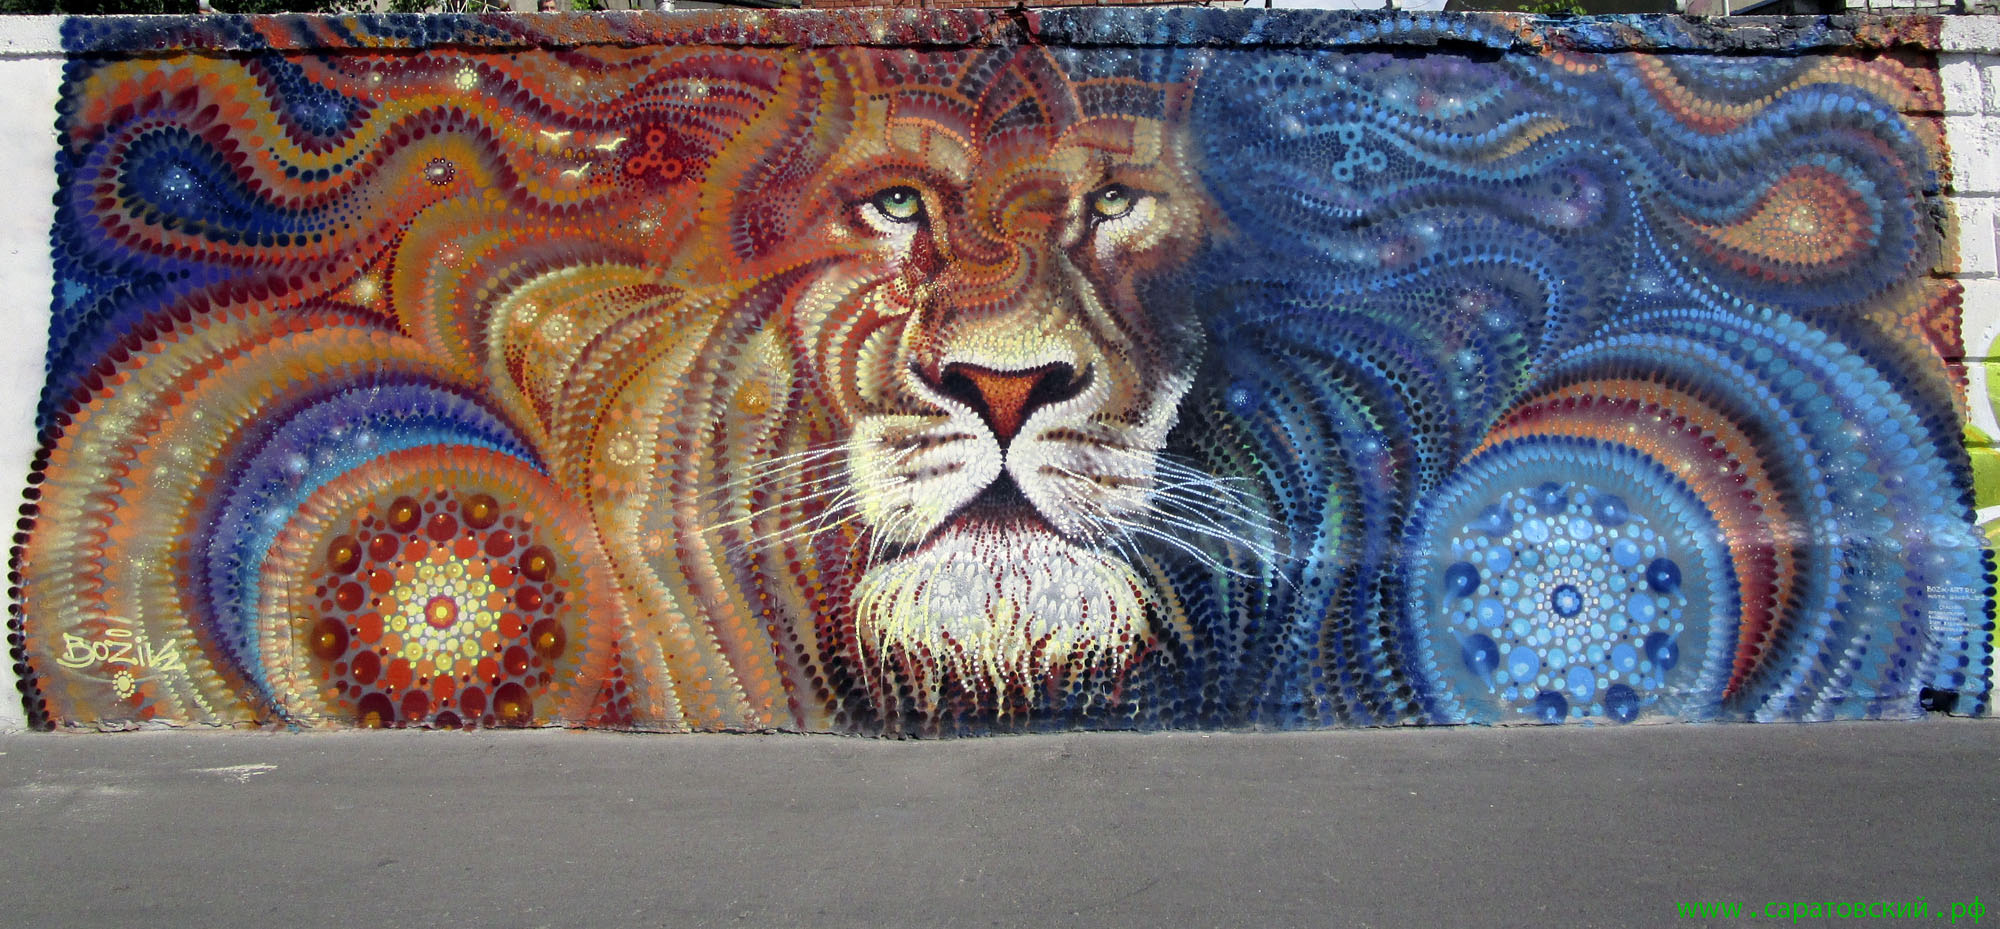 Saratov quayside graffiti: a lion, the Benders, and Saratov, Russia